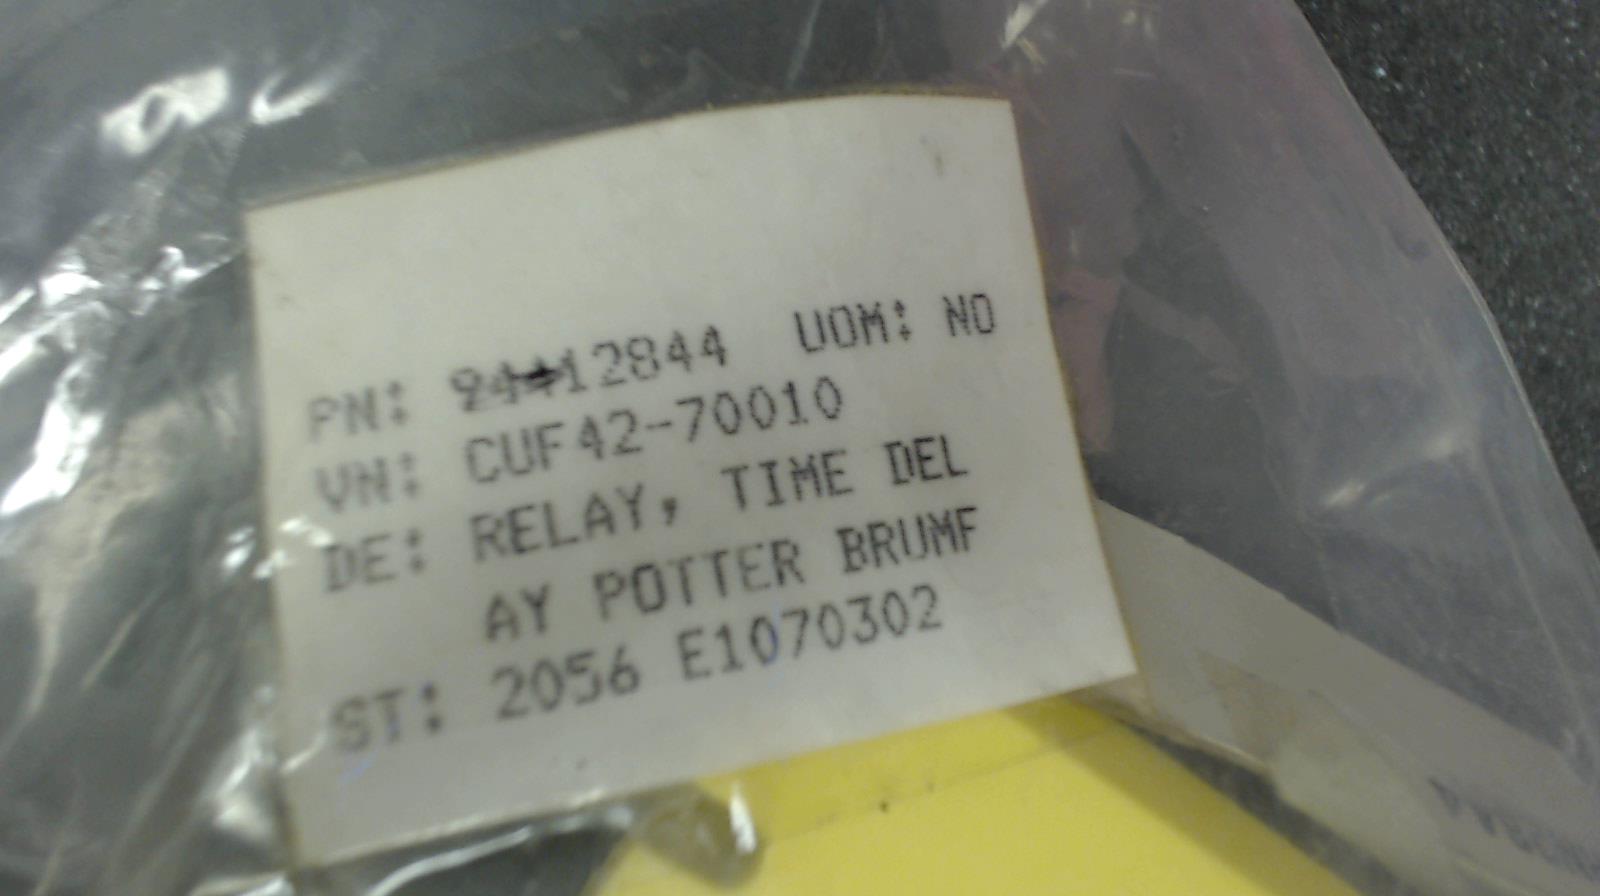 CUF42-70010 NEWARK ELECTRONICS : Spare Parts : XL-T